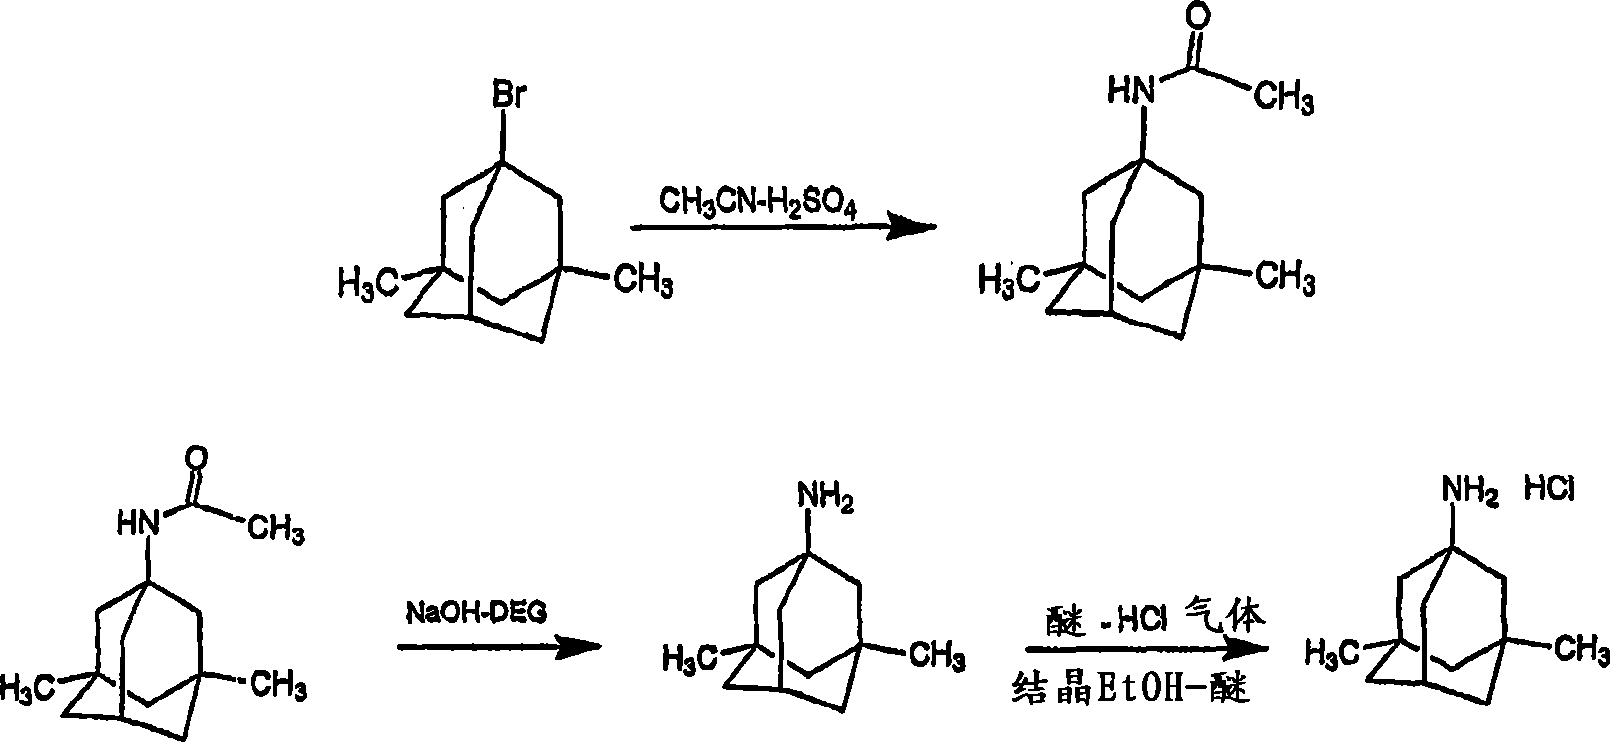 Process for the preparation of 1-amino-3,5-dimethyladamantane hydrochloride